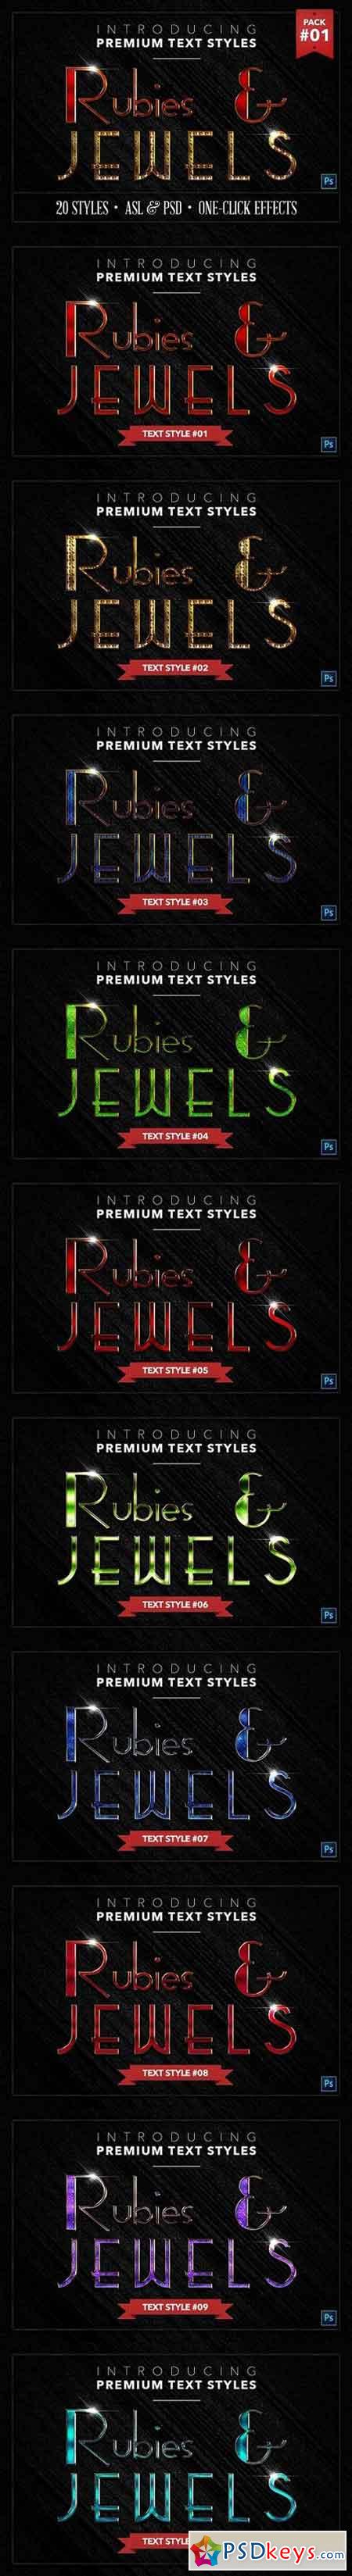 Rubies & Jewels #1 - 20 Styles 1327719